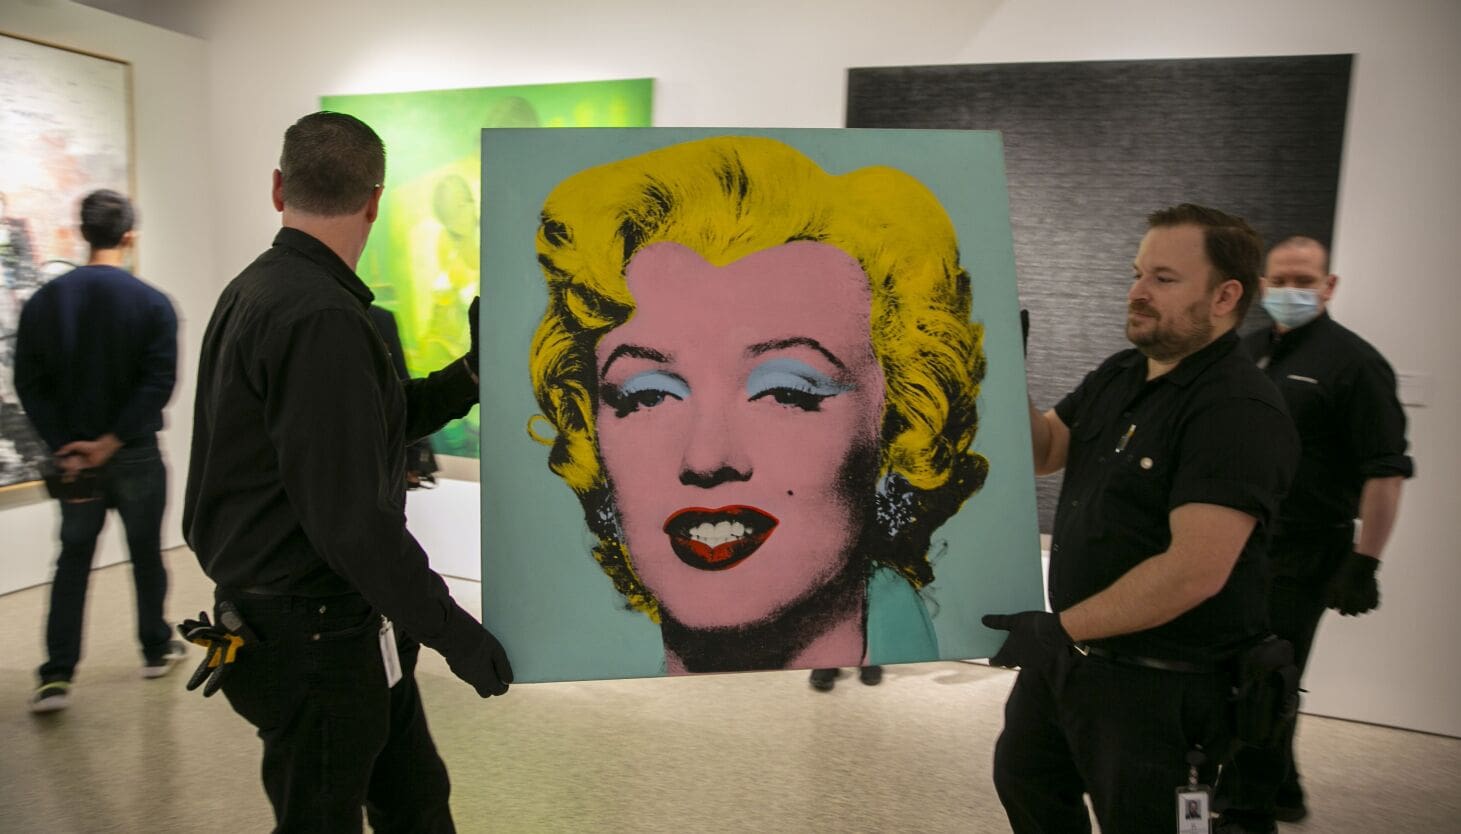 Marilyn Monroe portrait sold for $195 million